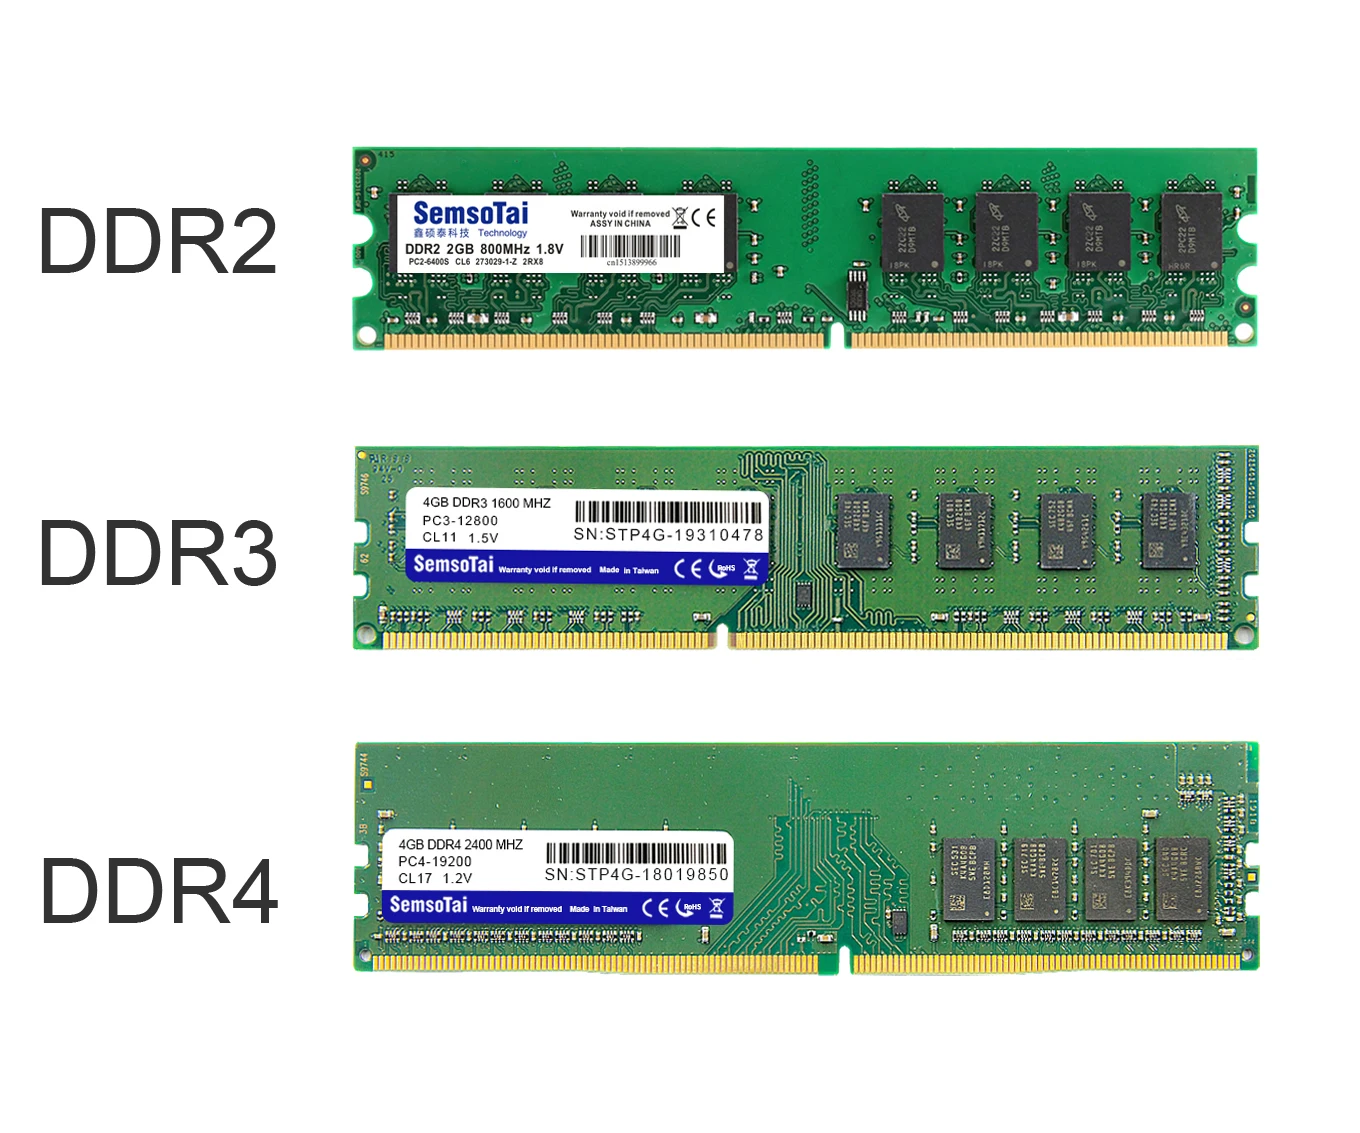 894円 新作 大人気 4GBパワーセットメモリボード NEC N8102-310互換 2GB 2GB×2 PC2-5300F ECC DDR2-667 SDRAM 中古